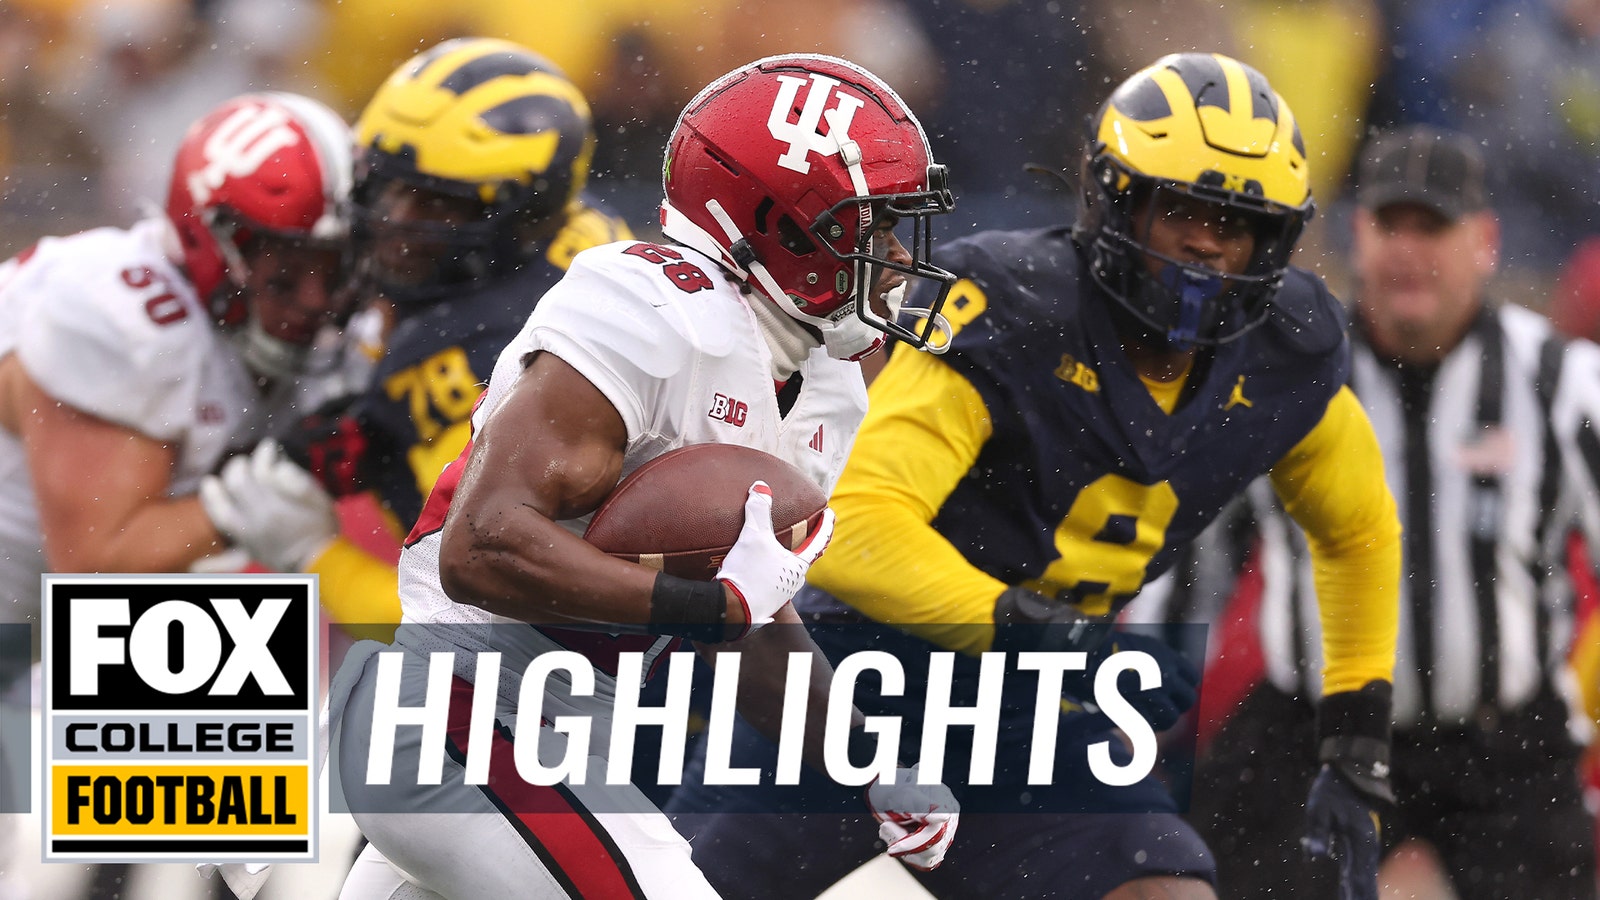 Highlights: Michigan rolls over Indiana